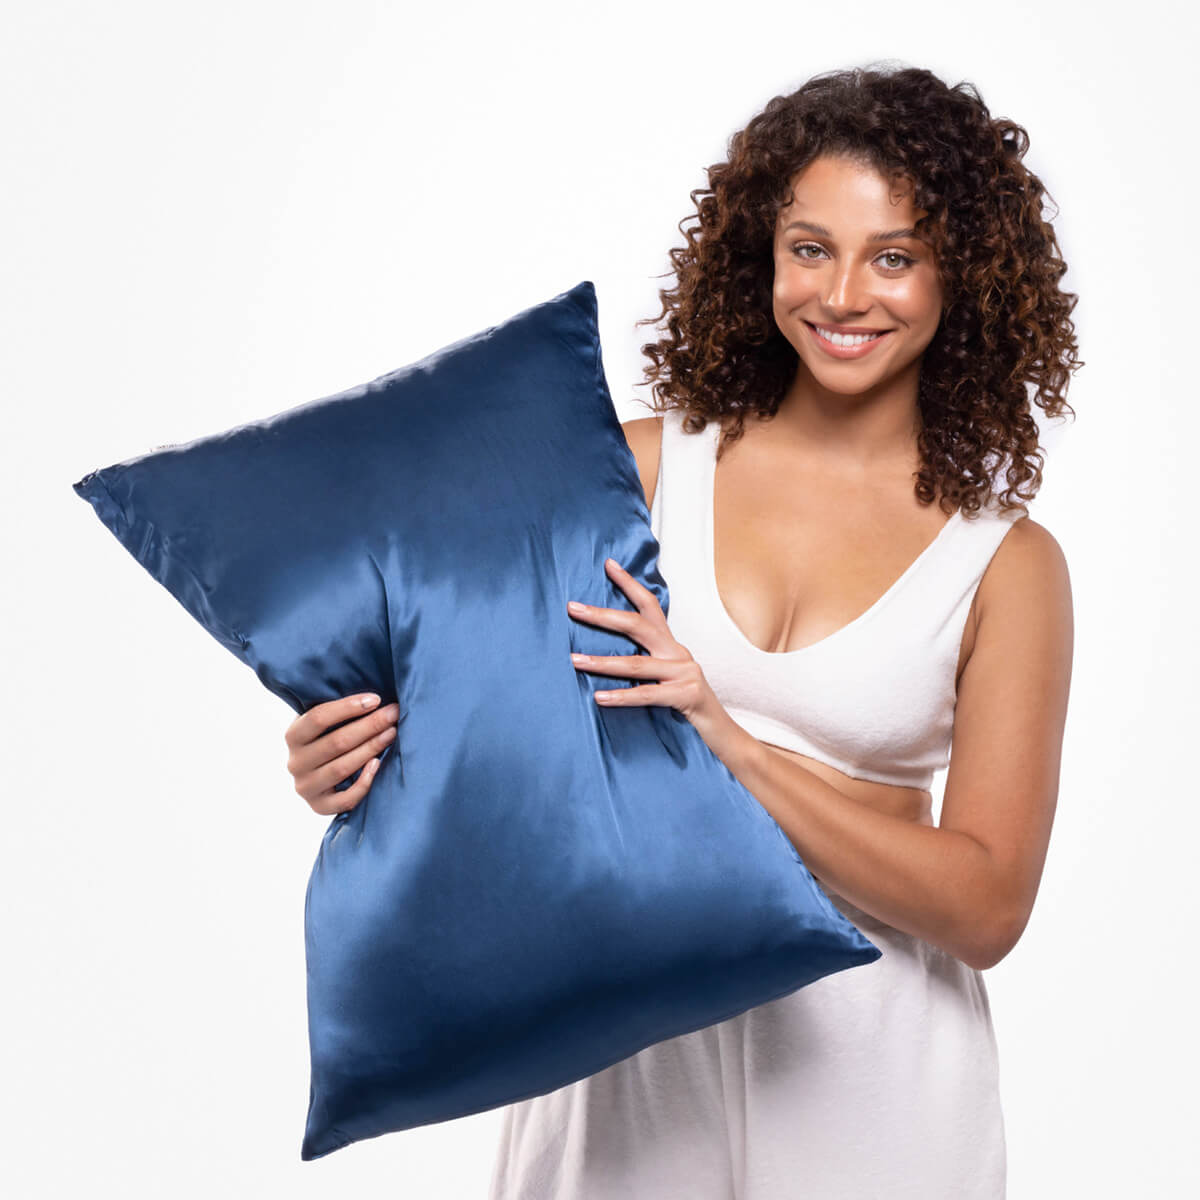 Silk Pillowcase - Navy Blue